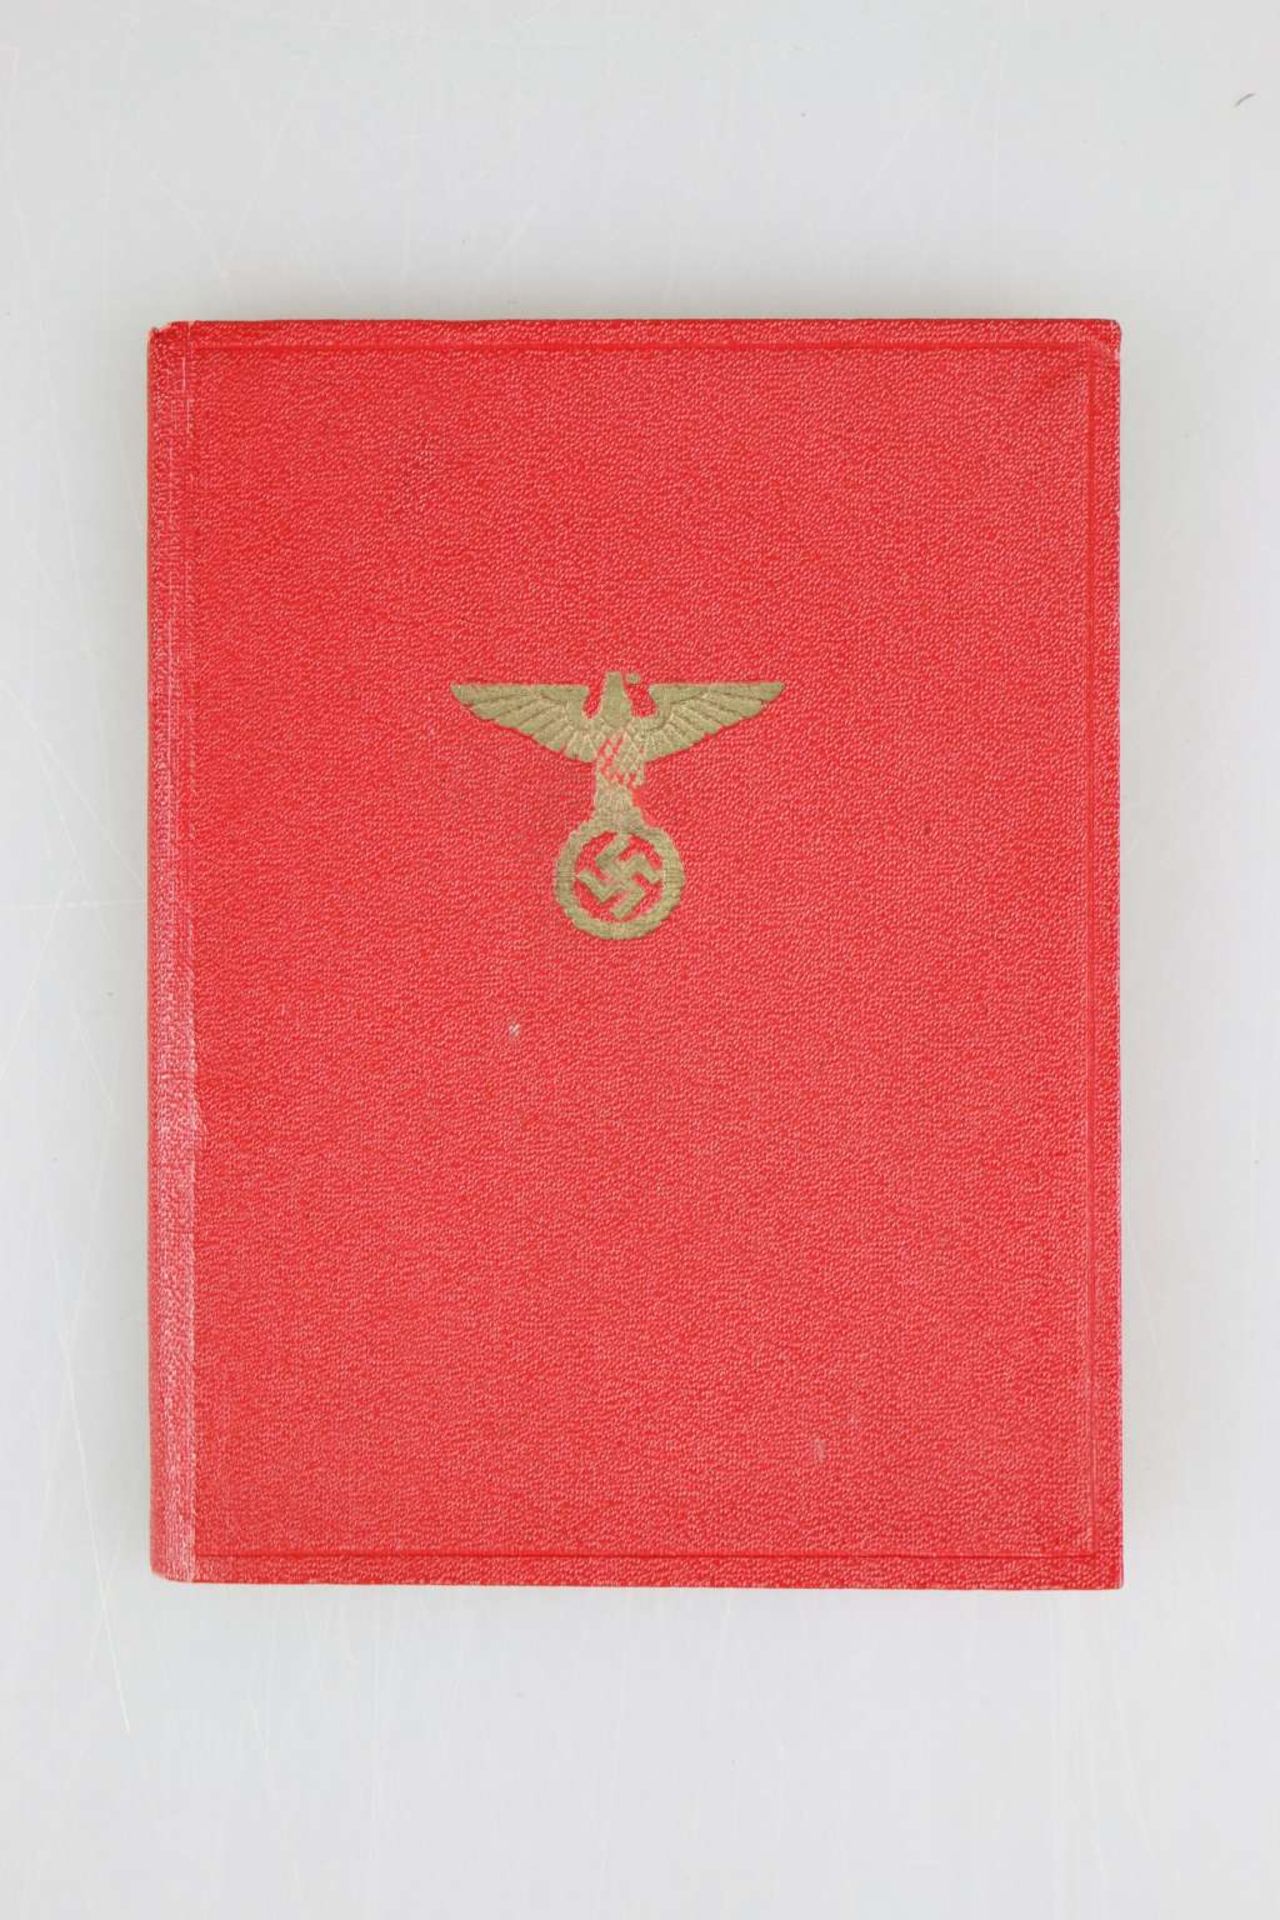 NSDAP - Mitgliedsbuch Nr. 2275351. - Image 2 of 4